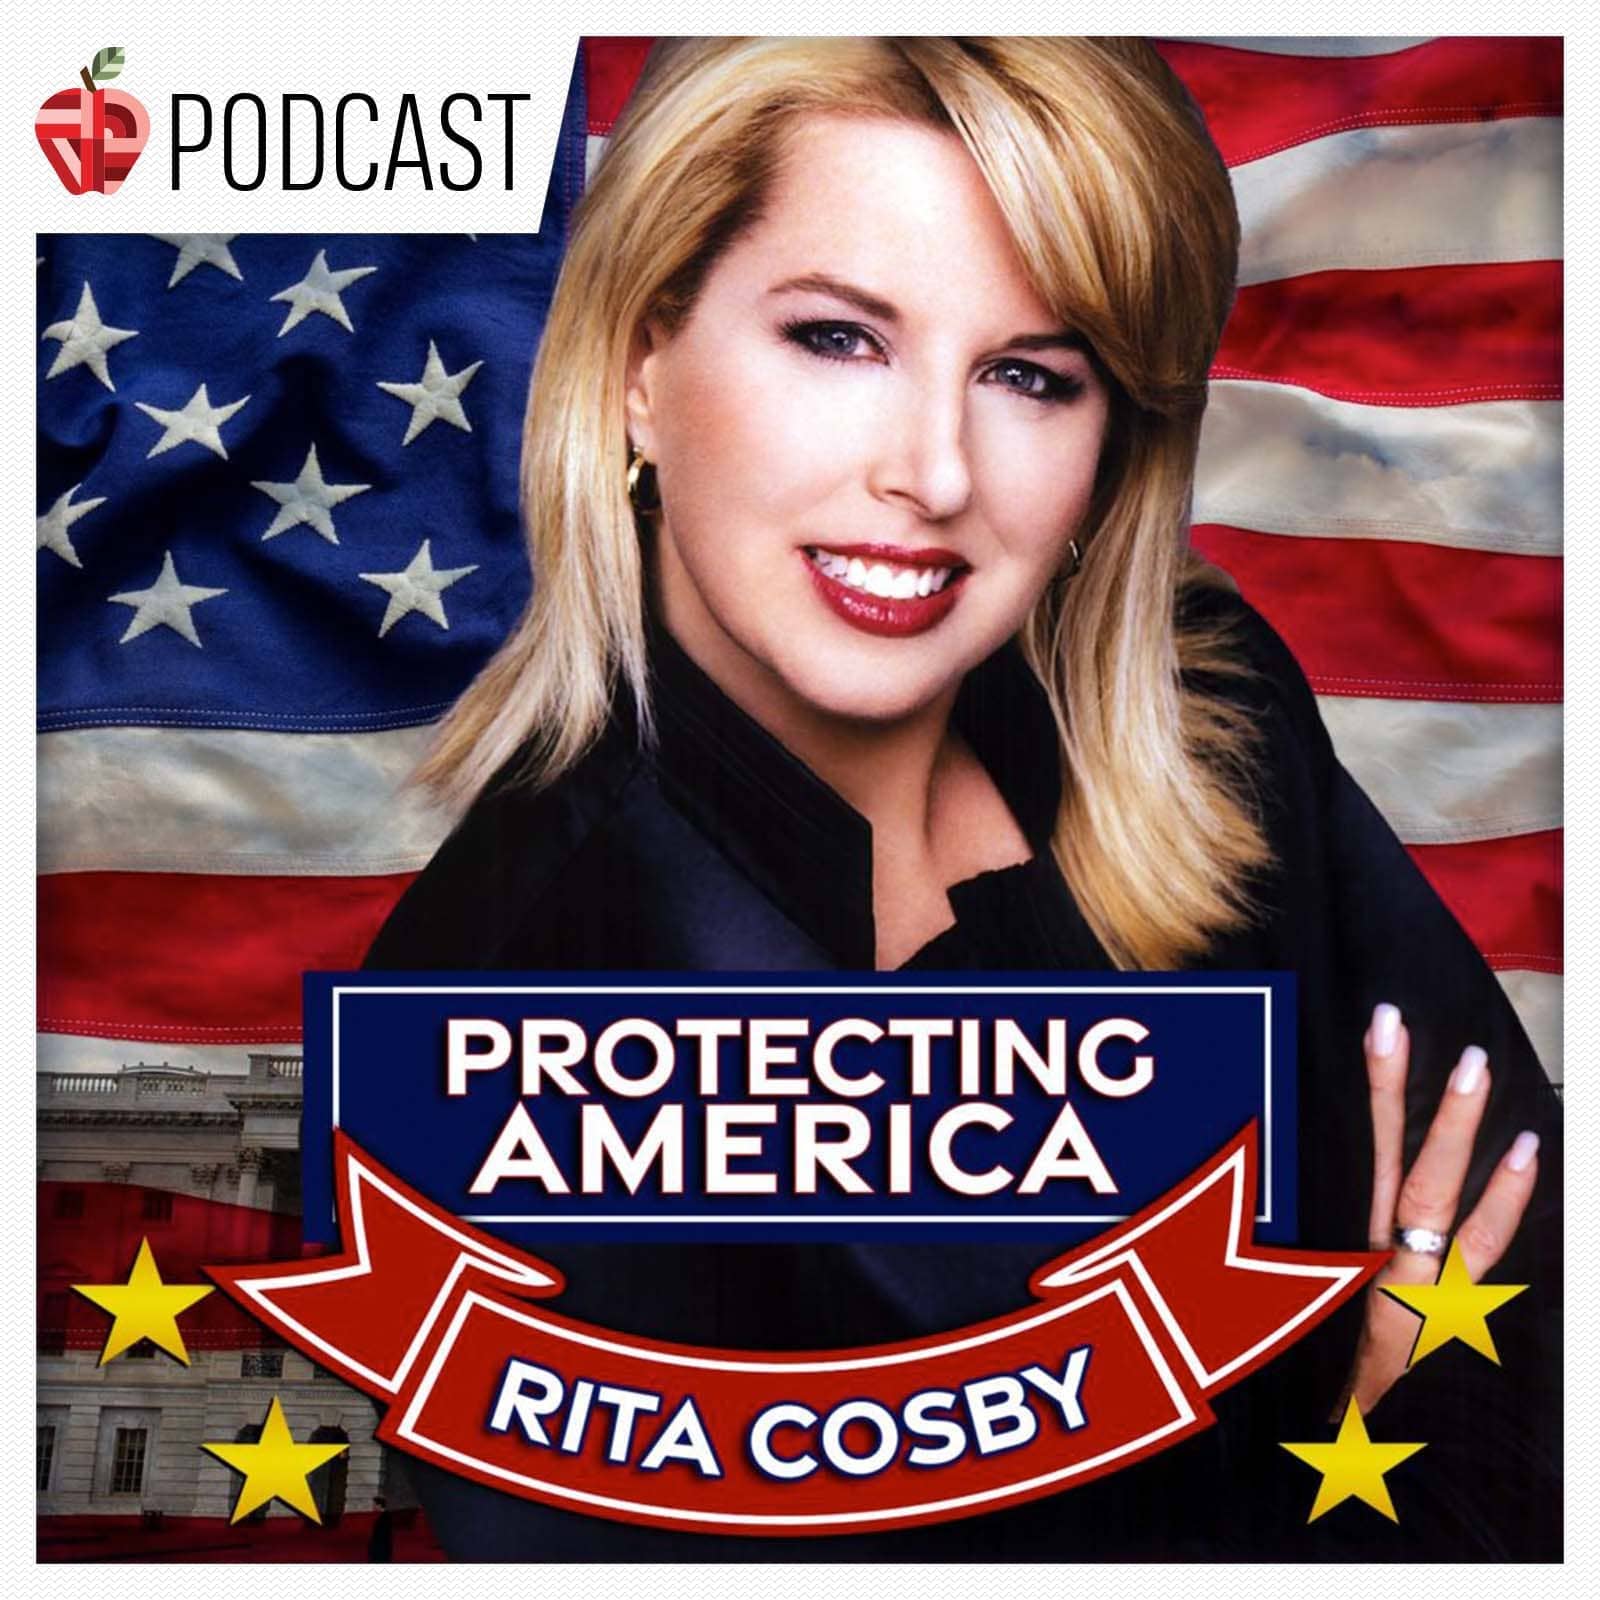 rita-cosby-protecting-america-correct-podcast-new-logo-56